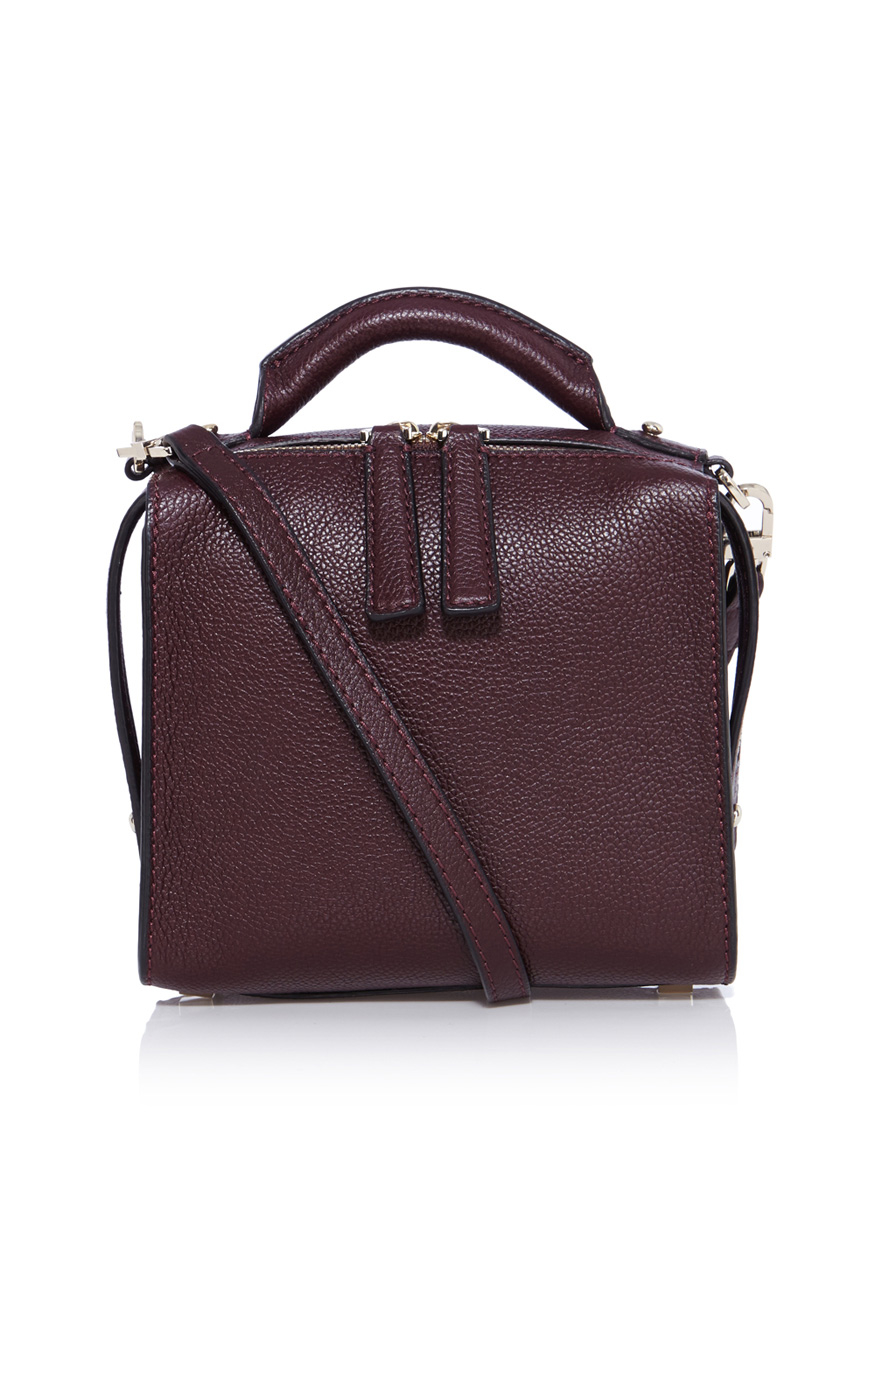 Karen Millen Burgundy Mini Leather Bag in Red - Lyst